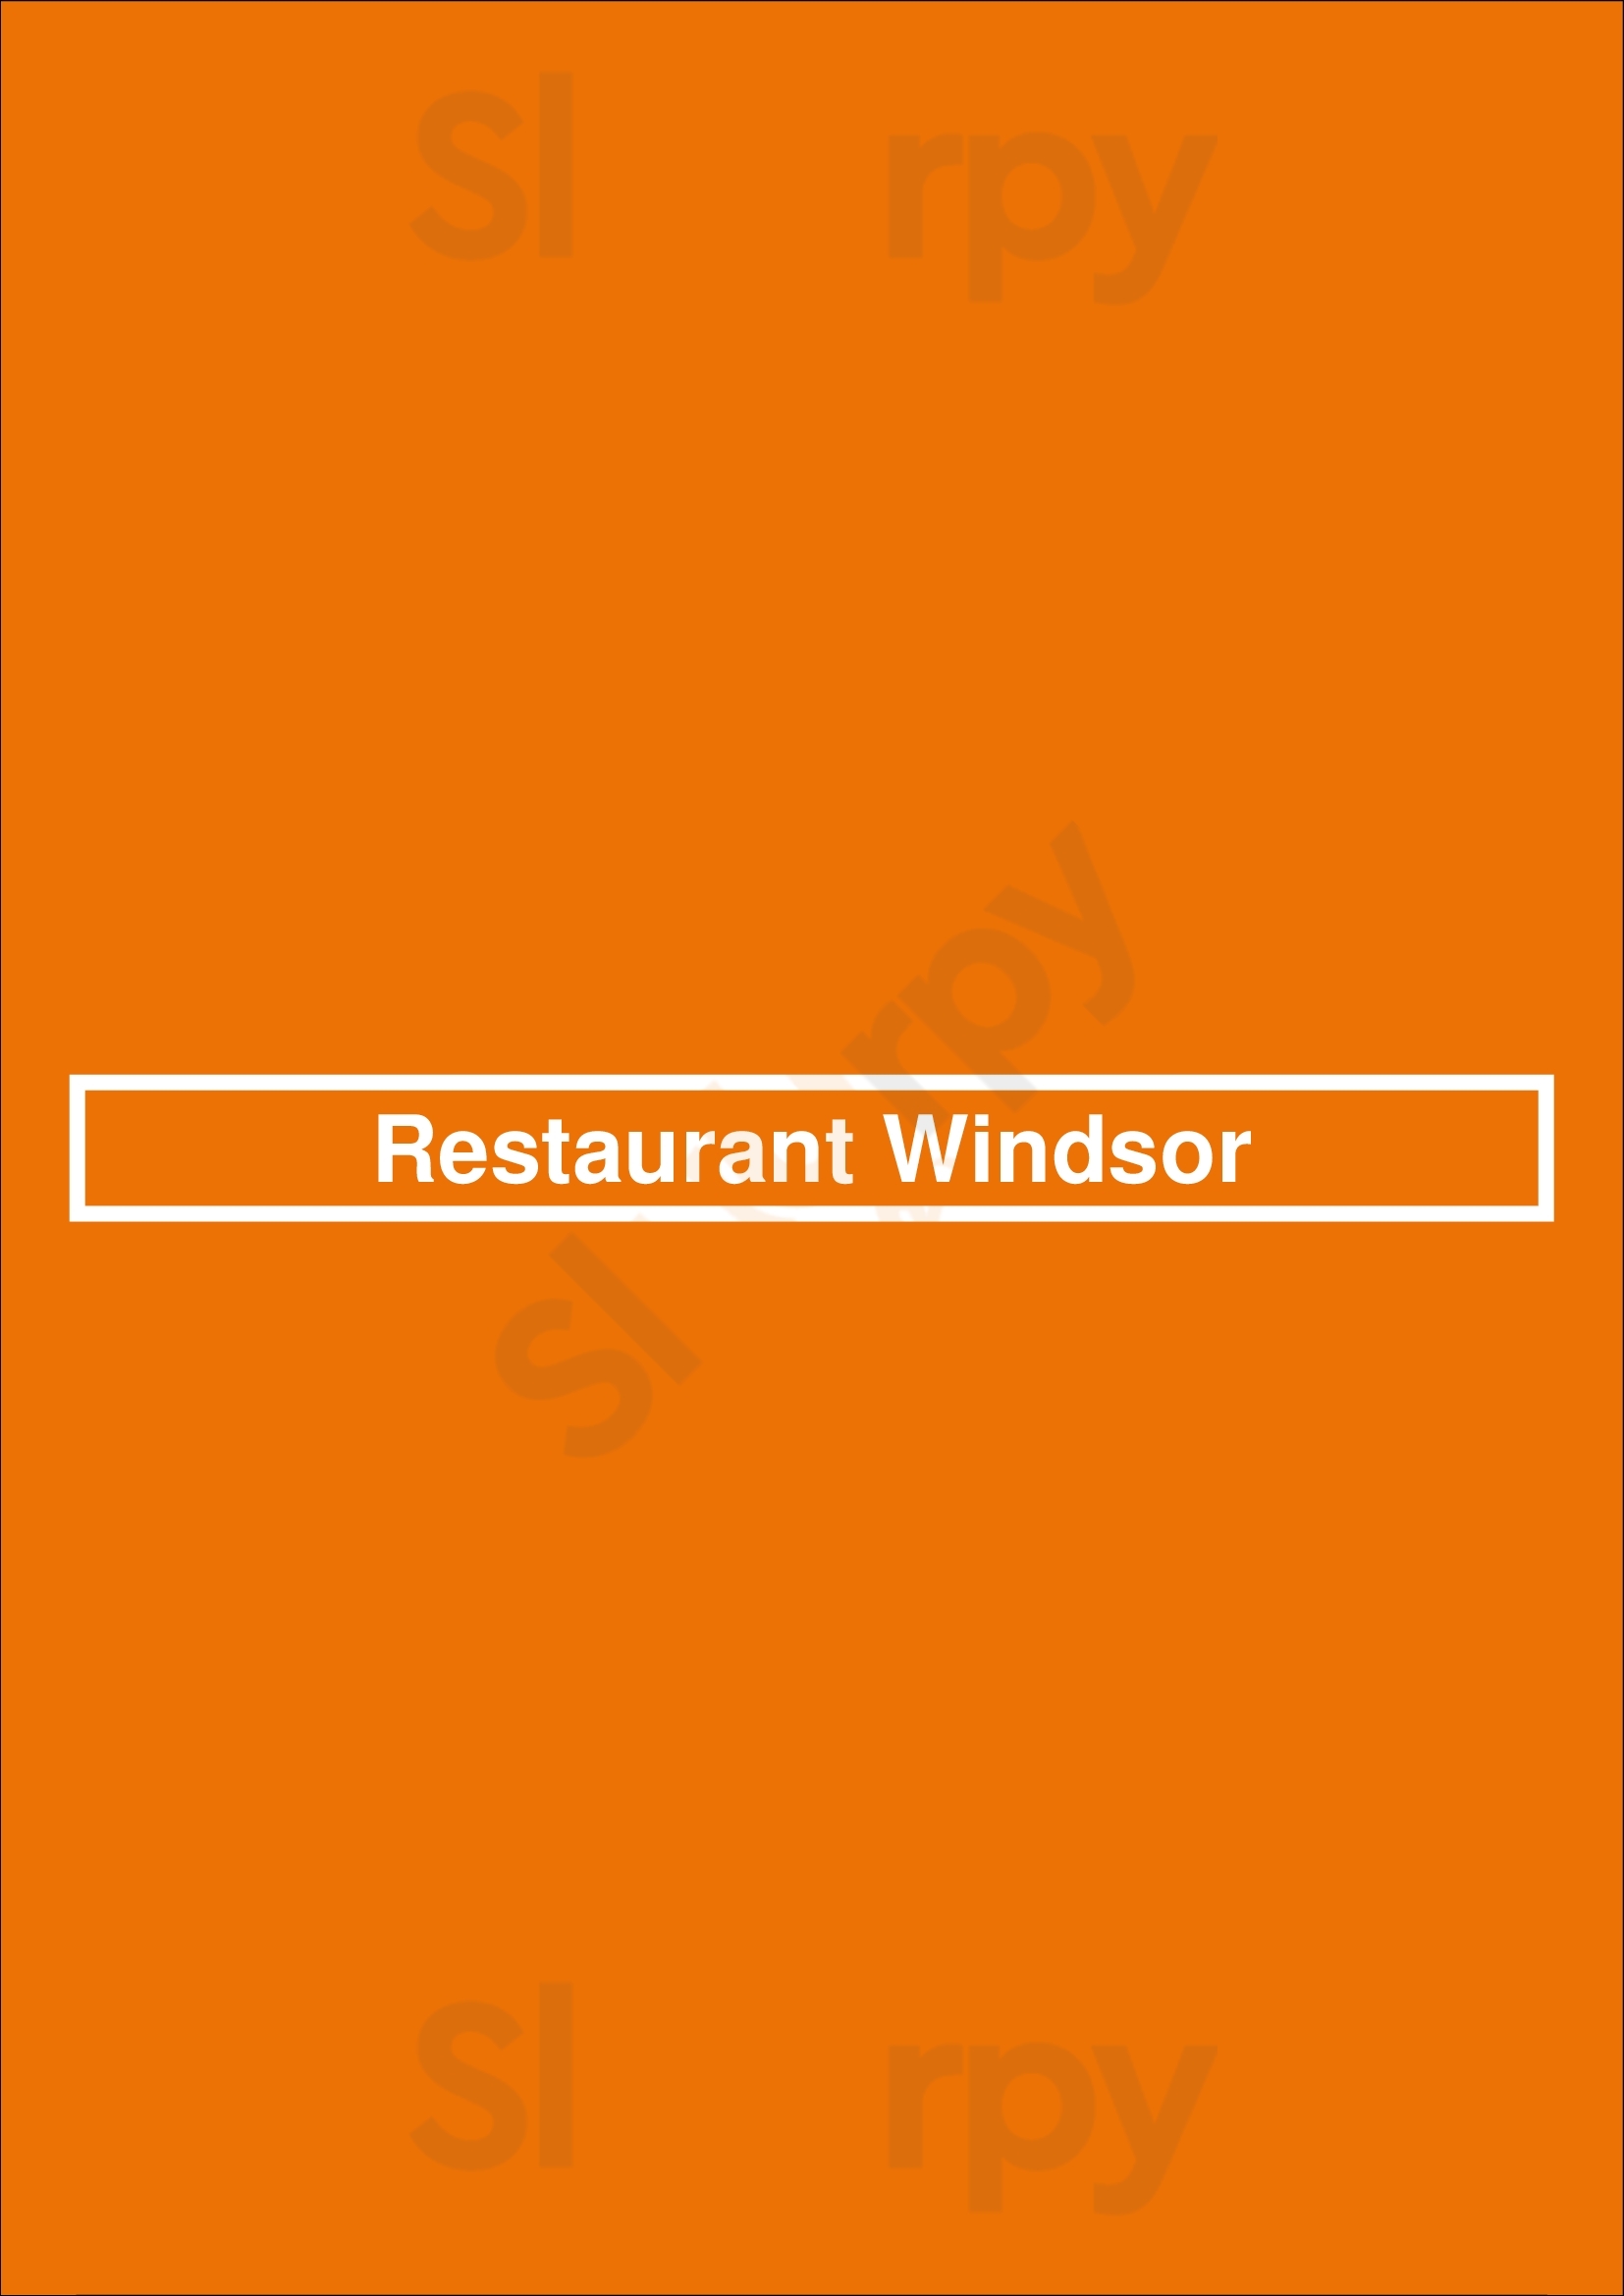 Restaurant Windsor Barcelona Menu - 1